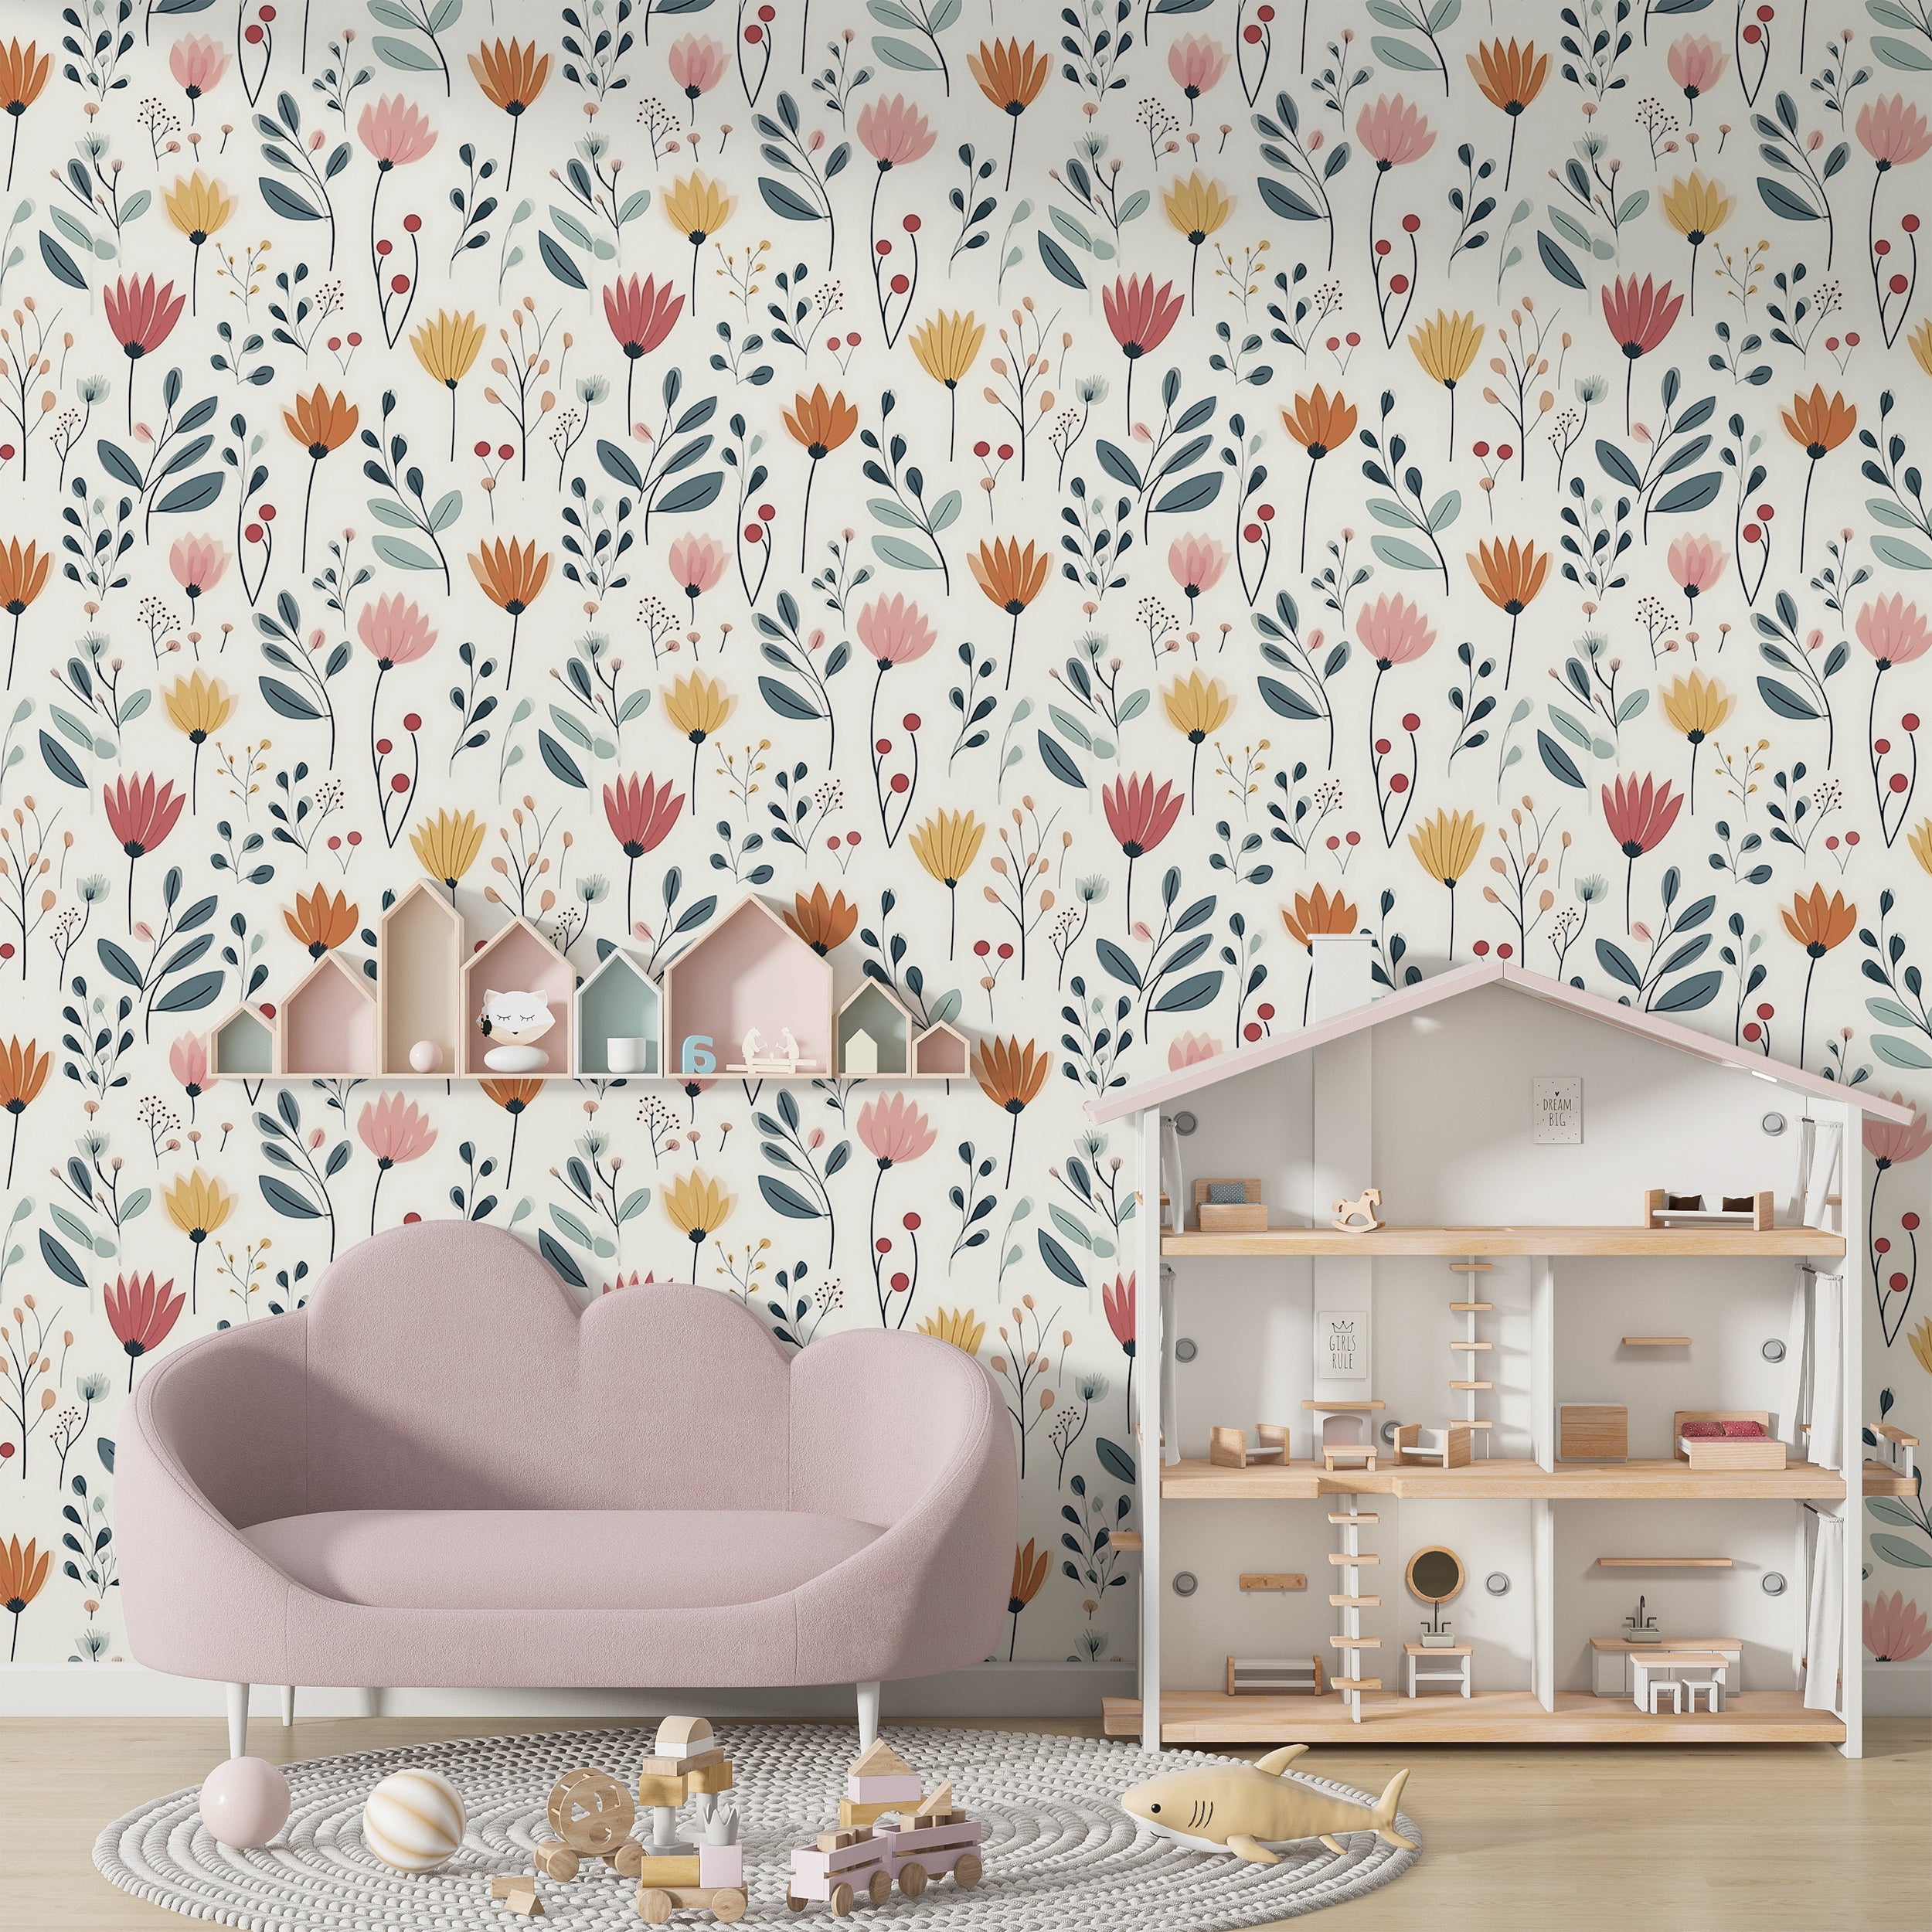 Soft Pastel Floral Wallpaper for Serene Interiors